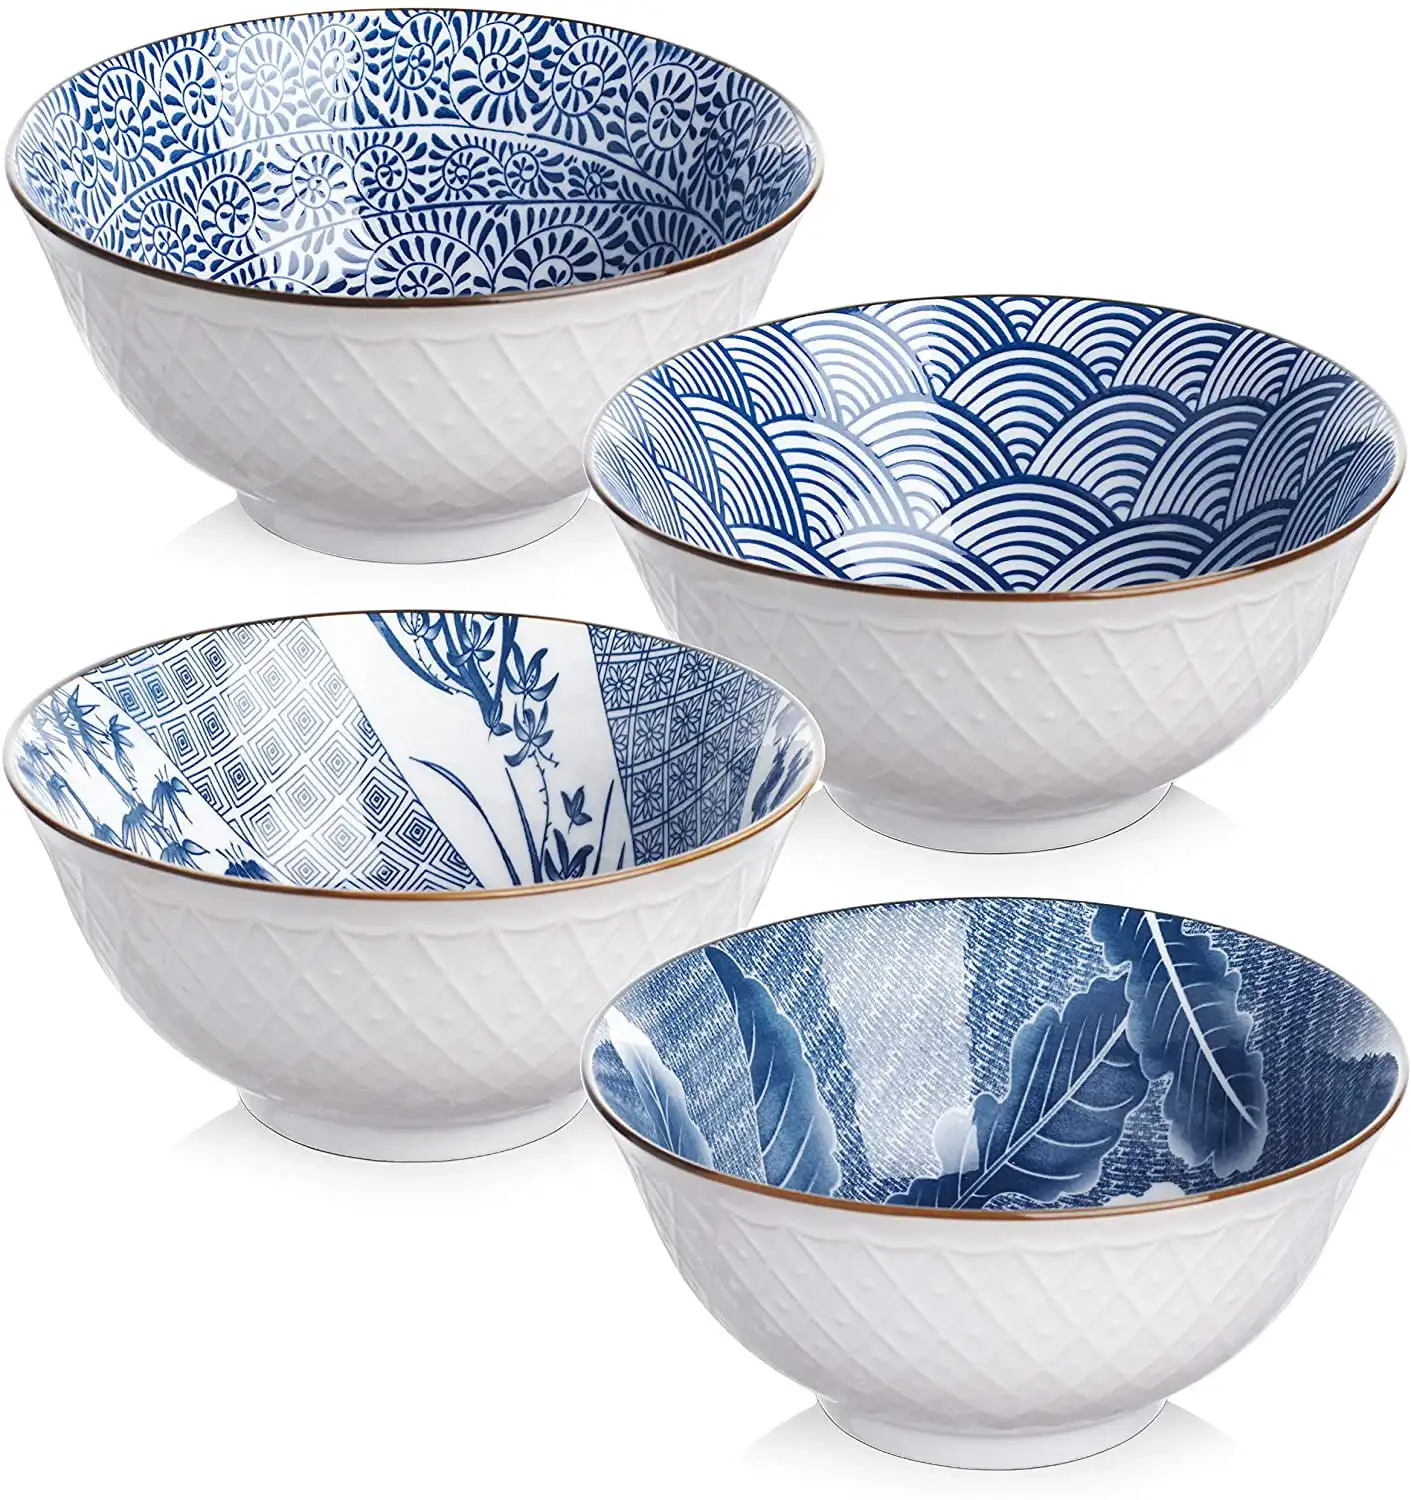 

Cereal, Ceramic Bowls for Soup, Salad, Pasta, Rice, 24 Ounces Microwave Dishwasher Safe, Assorted Blue White Patterns, Set of 4